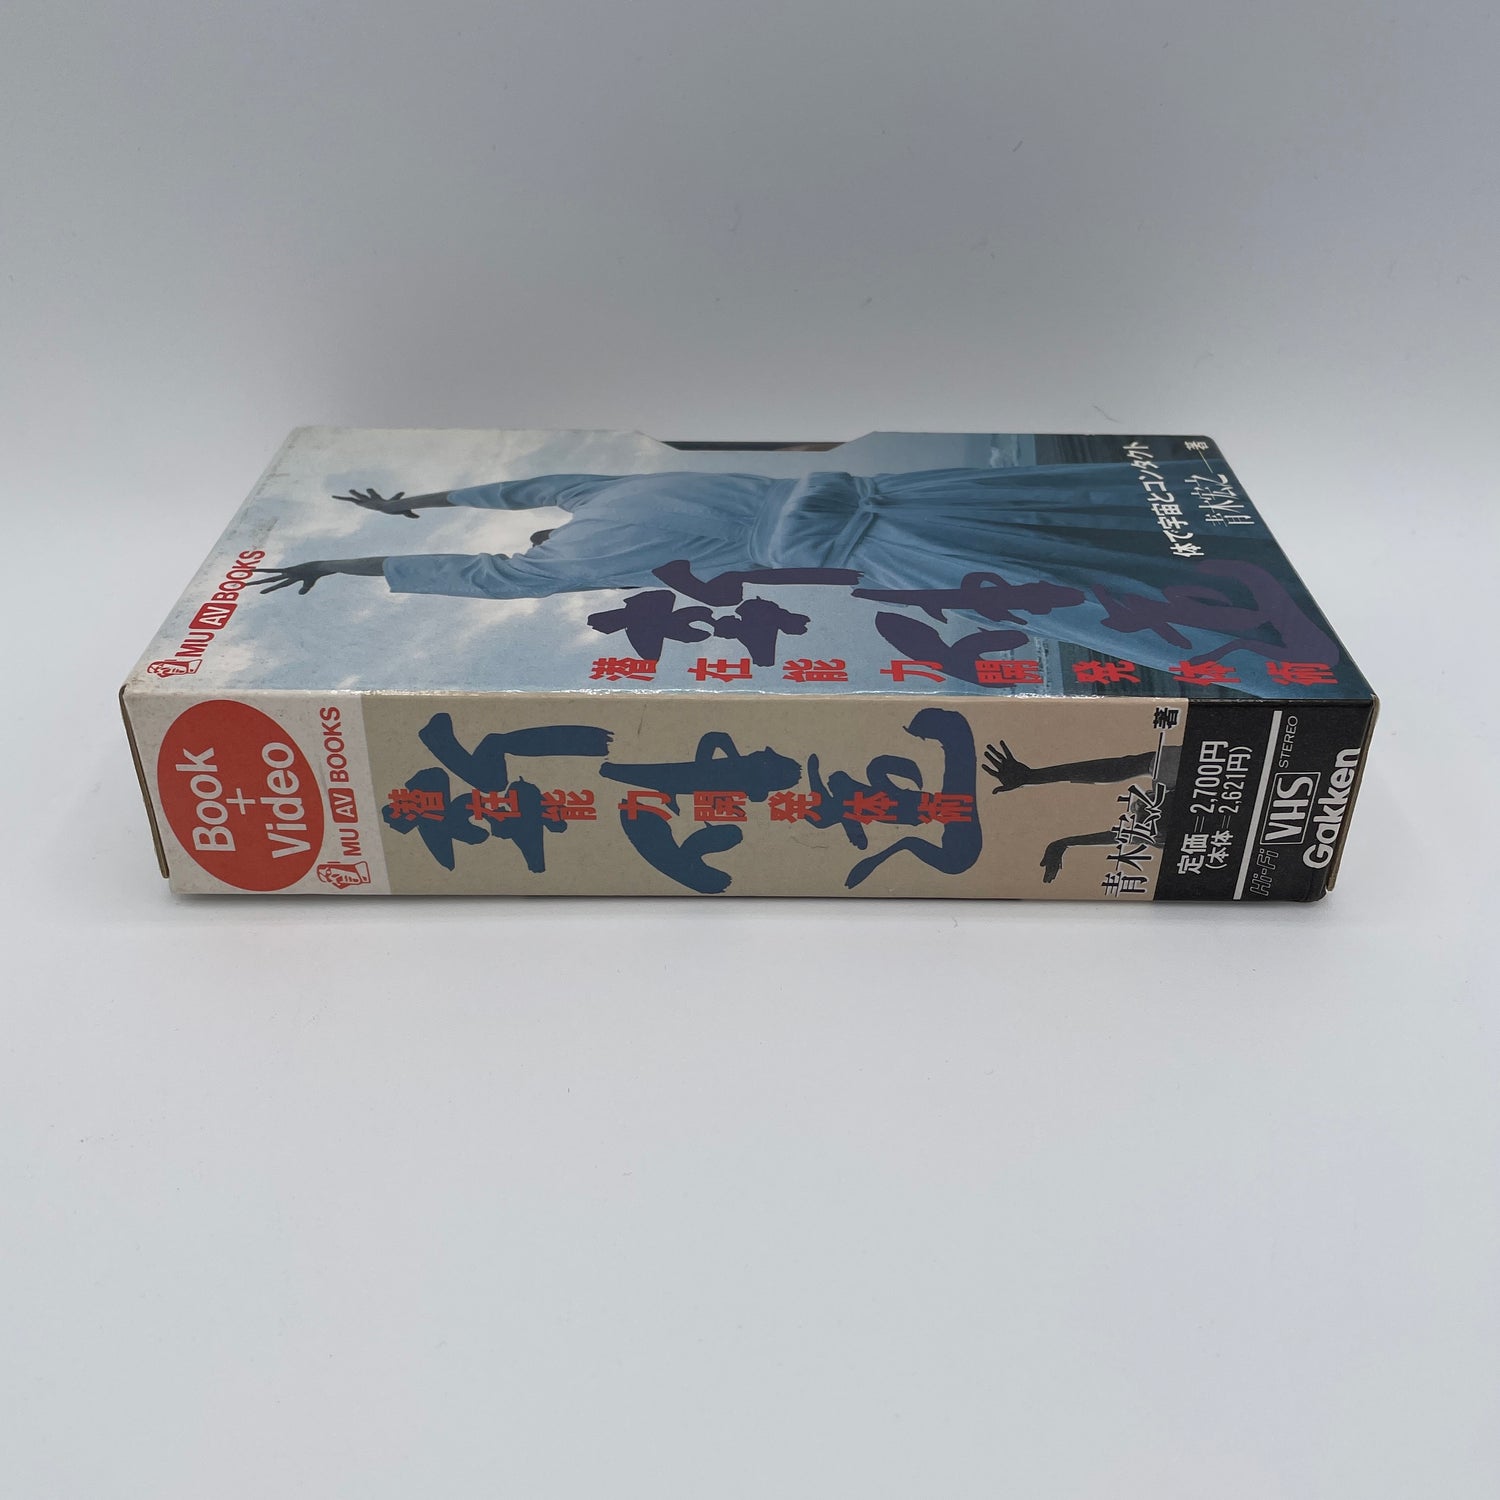 Shintaido Book & VHS Set by Hiroyuki Aoki (Preowned)